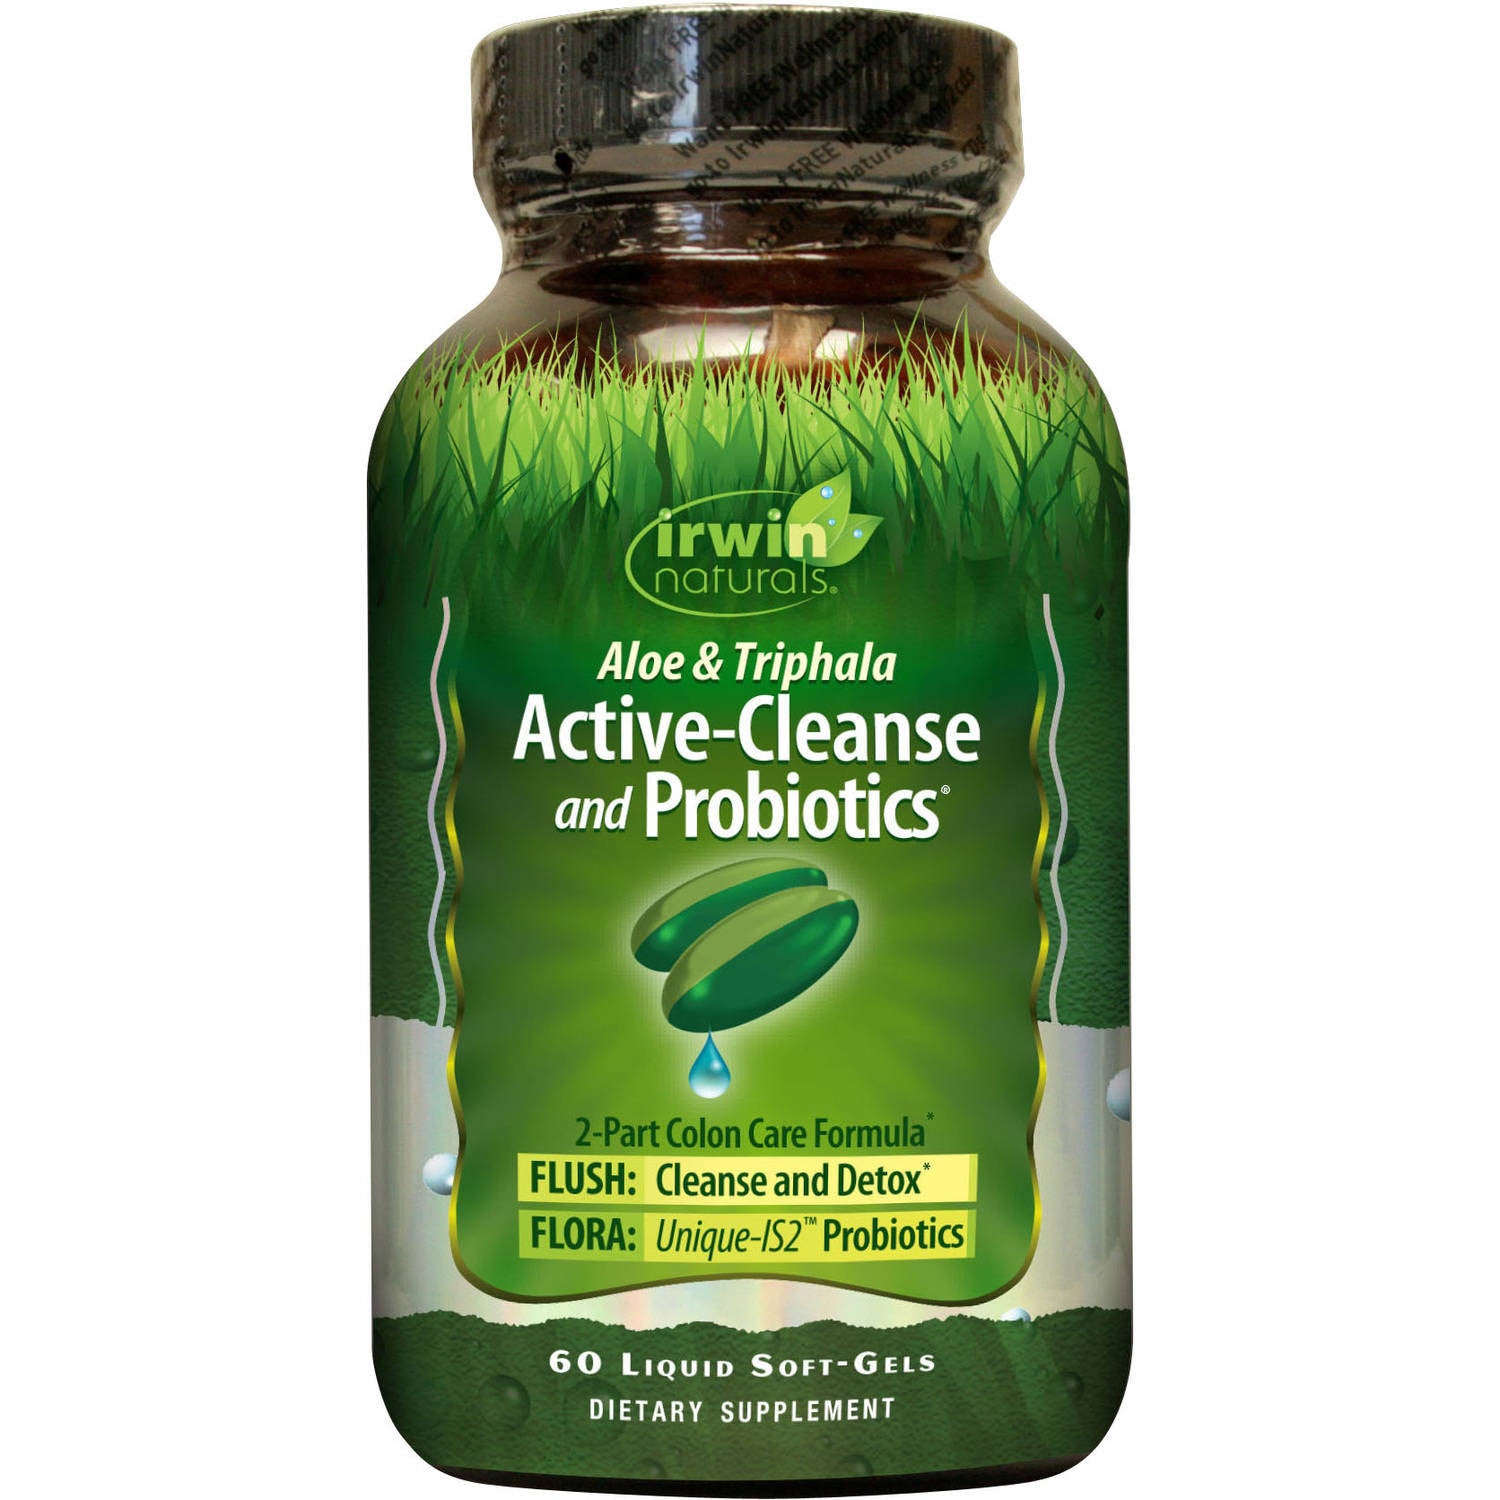 Irwin Naturals Aloe And Triphala Active Cleanse + Probiotics Natural Digestive Support - Gentle, Effective Detox + Elimination 2-Part Colon Care - Nourish + Balance - 60 Liquid Softgels